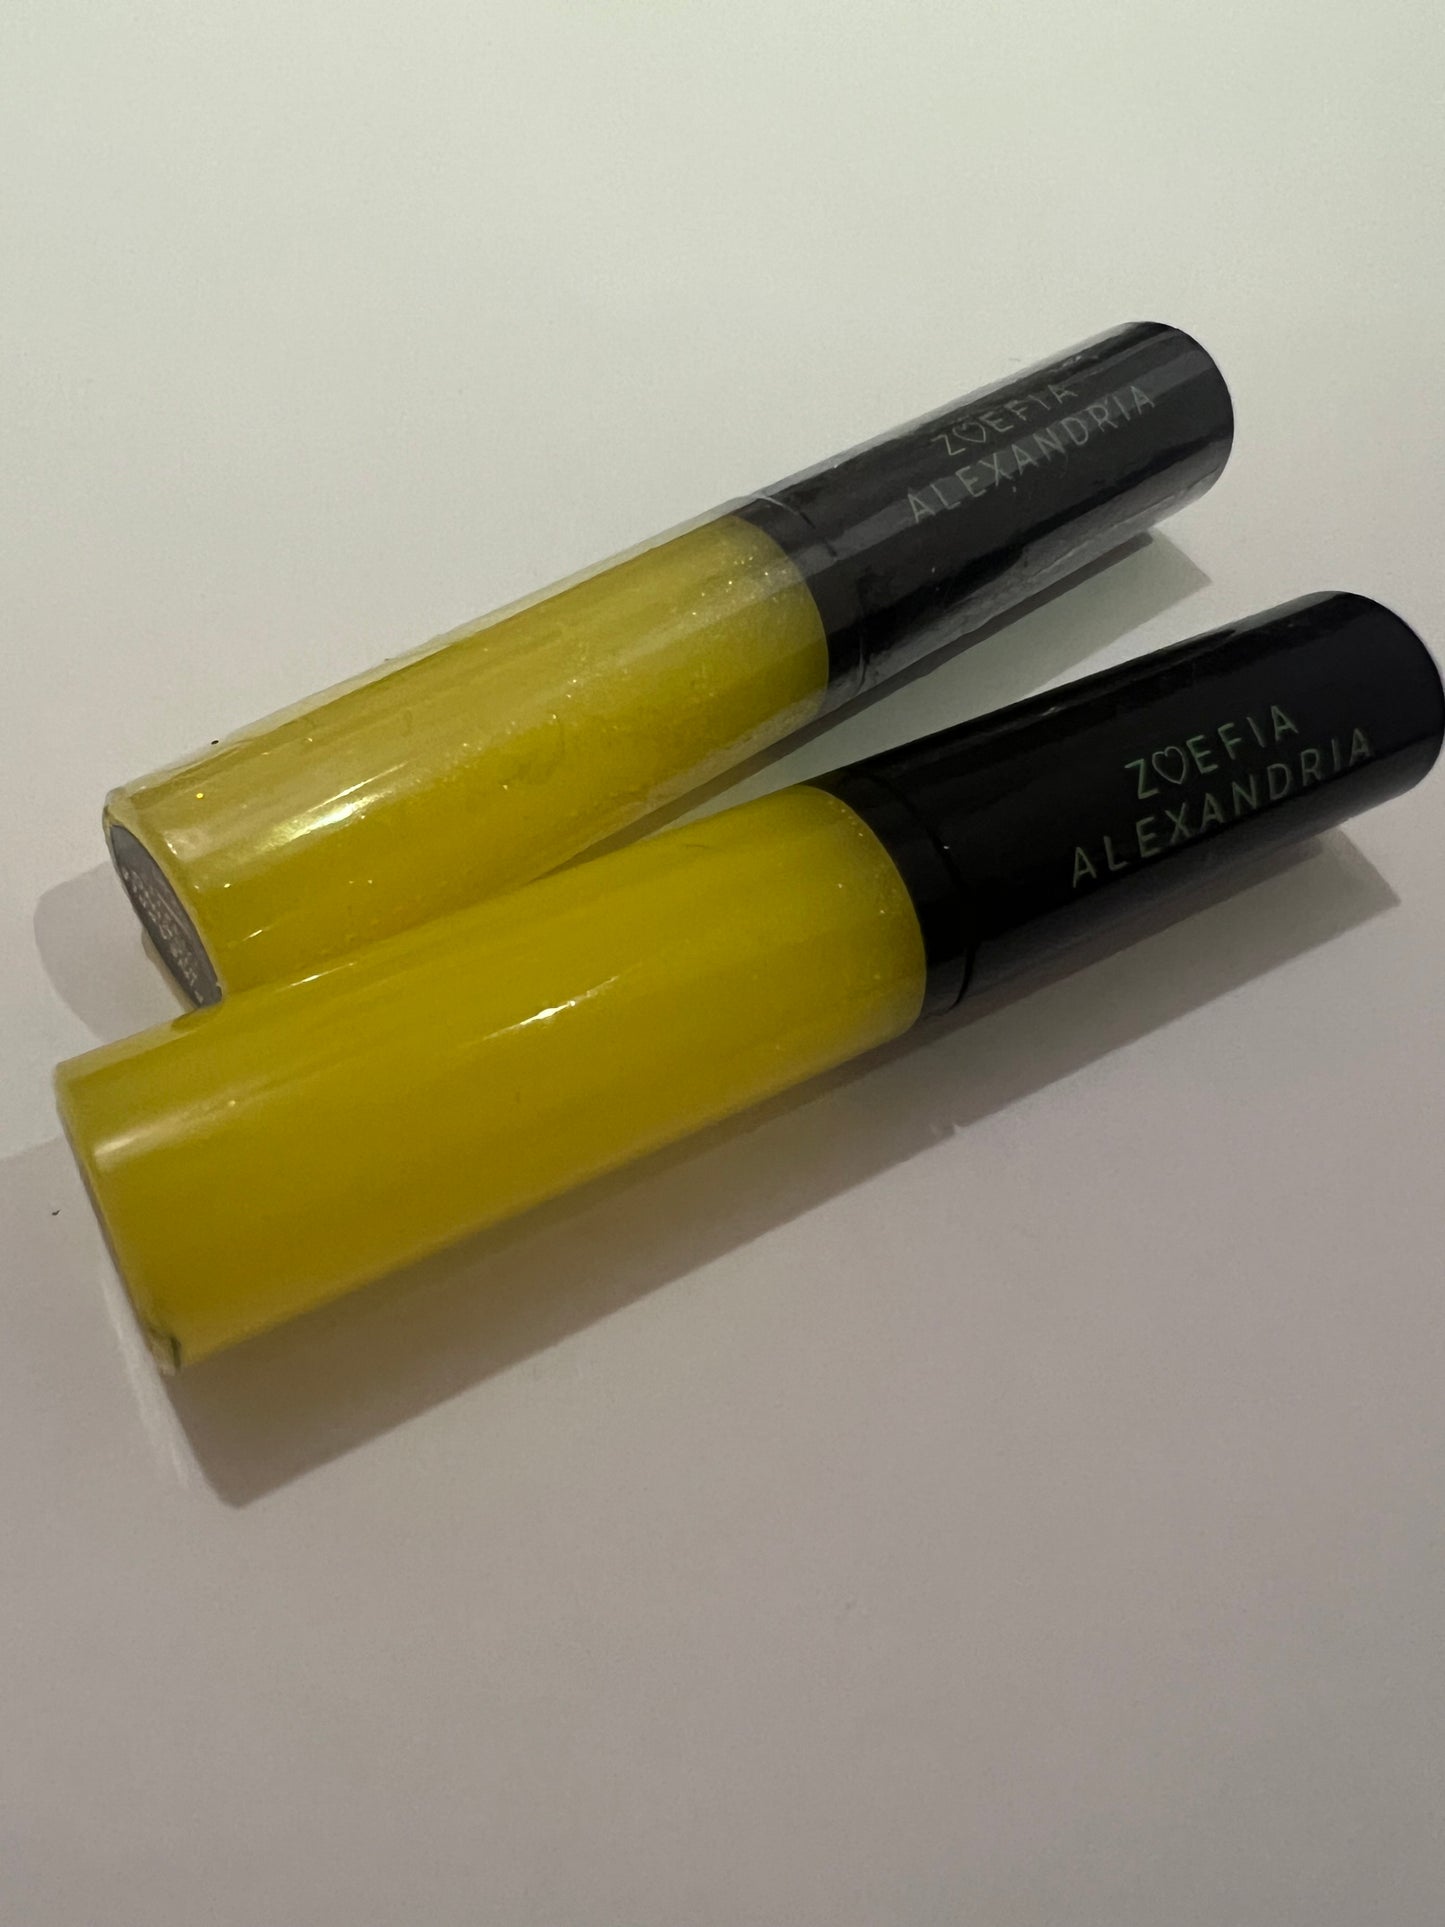 Flavored Sheer Lip Gloss - Pineapple